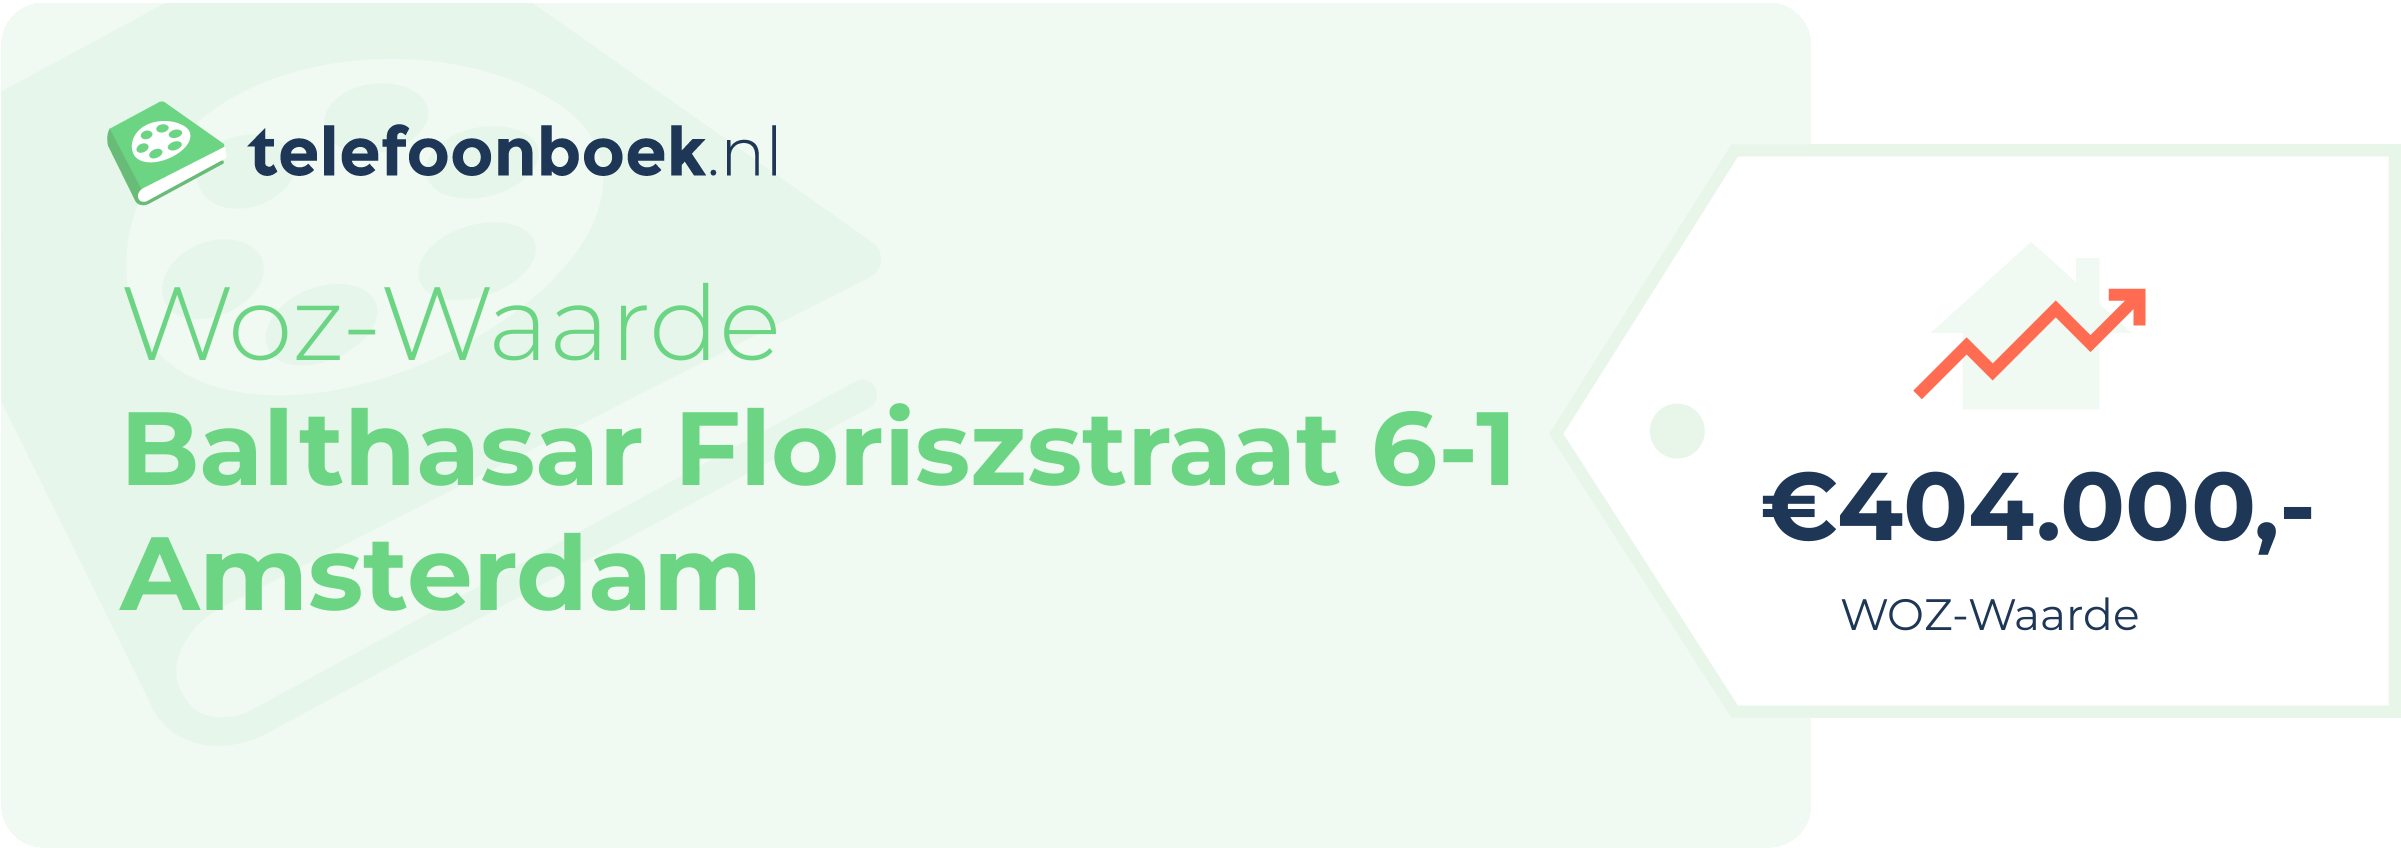 WOZ-waarde Balthasar Floriszstraat 6-1 Amsterdam